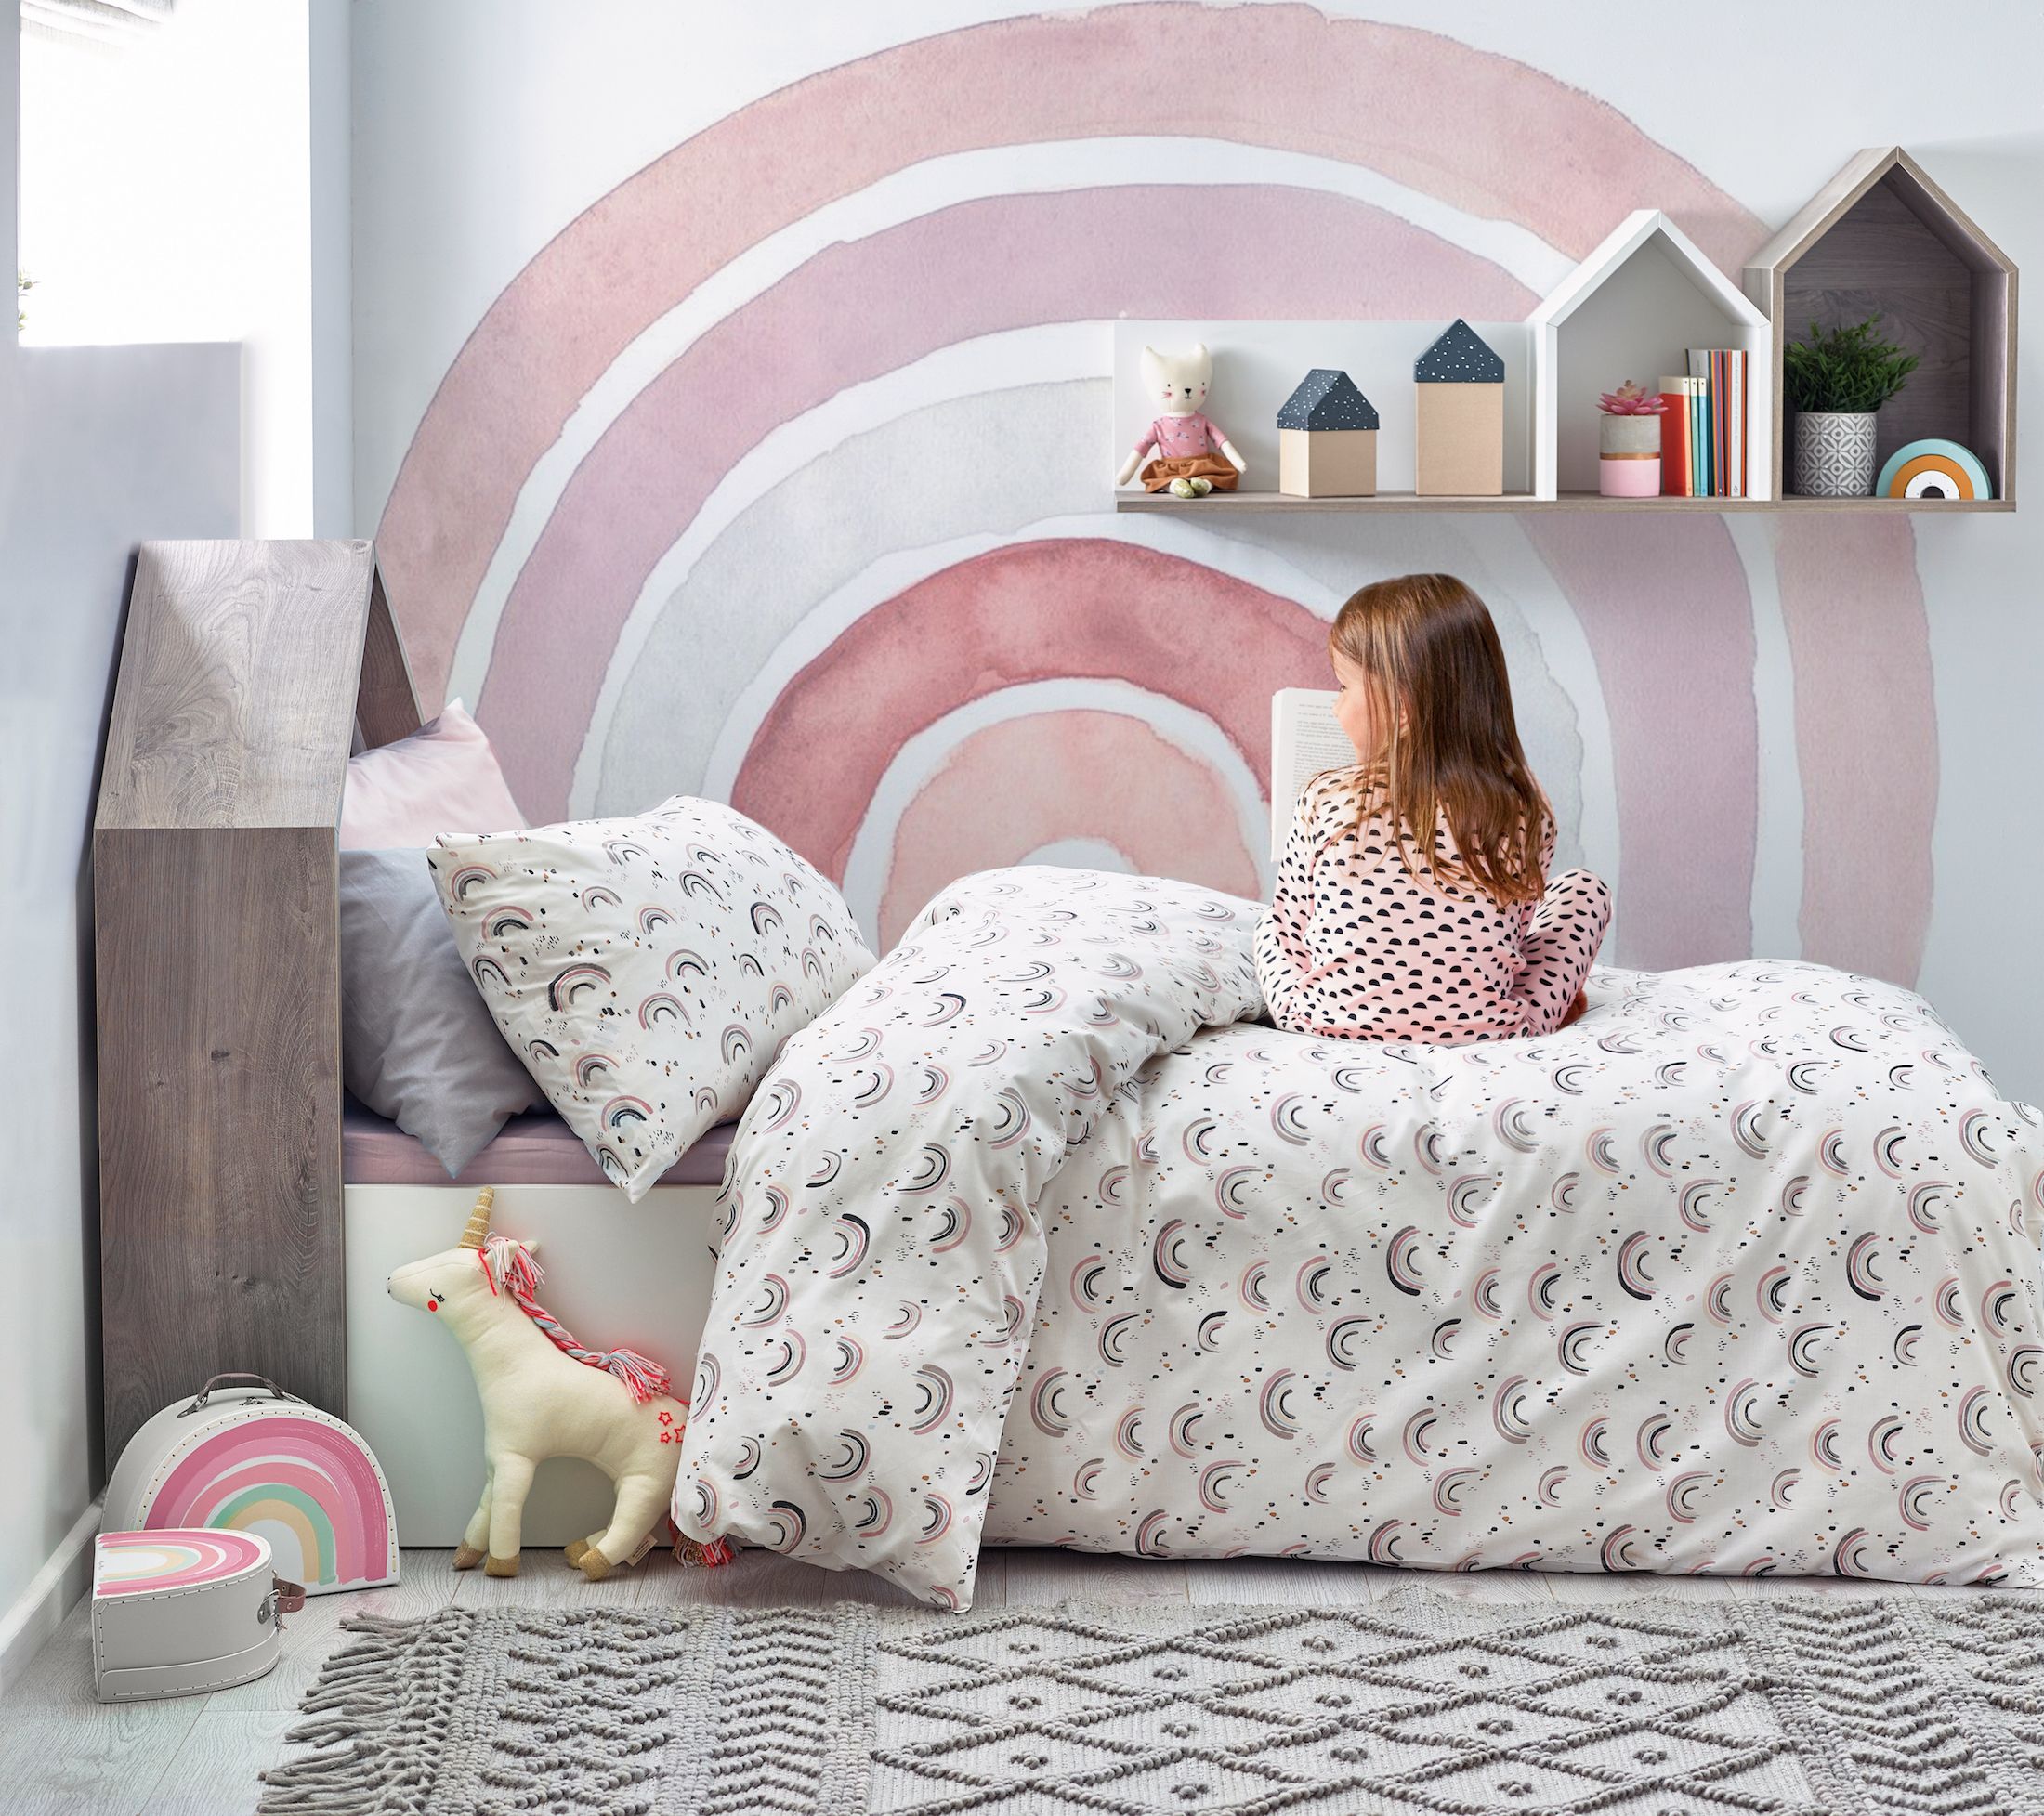 girls' bedroom ideas for 2021 - girls bedroom decor